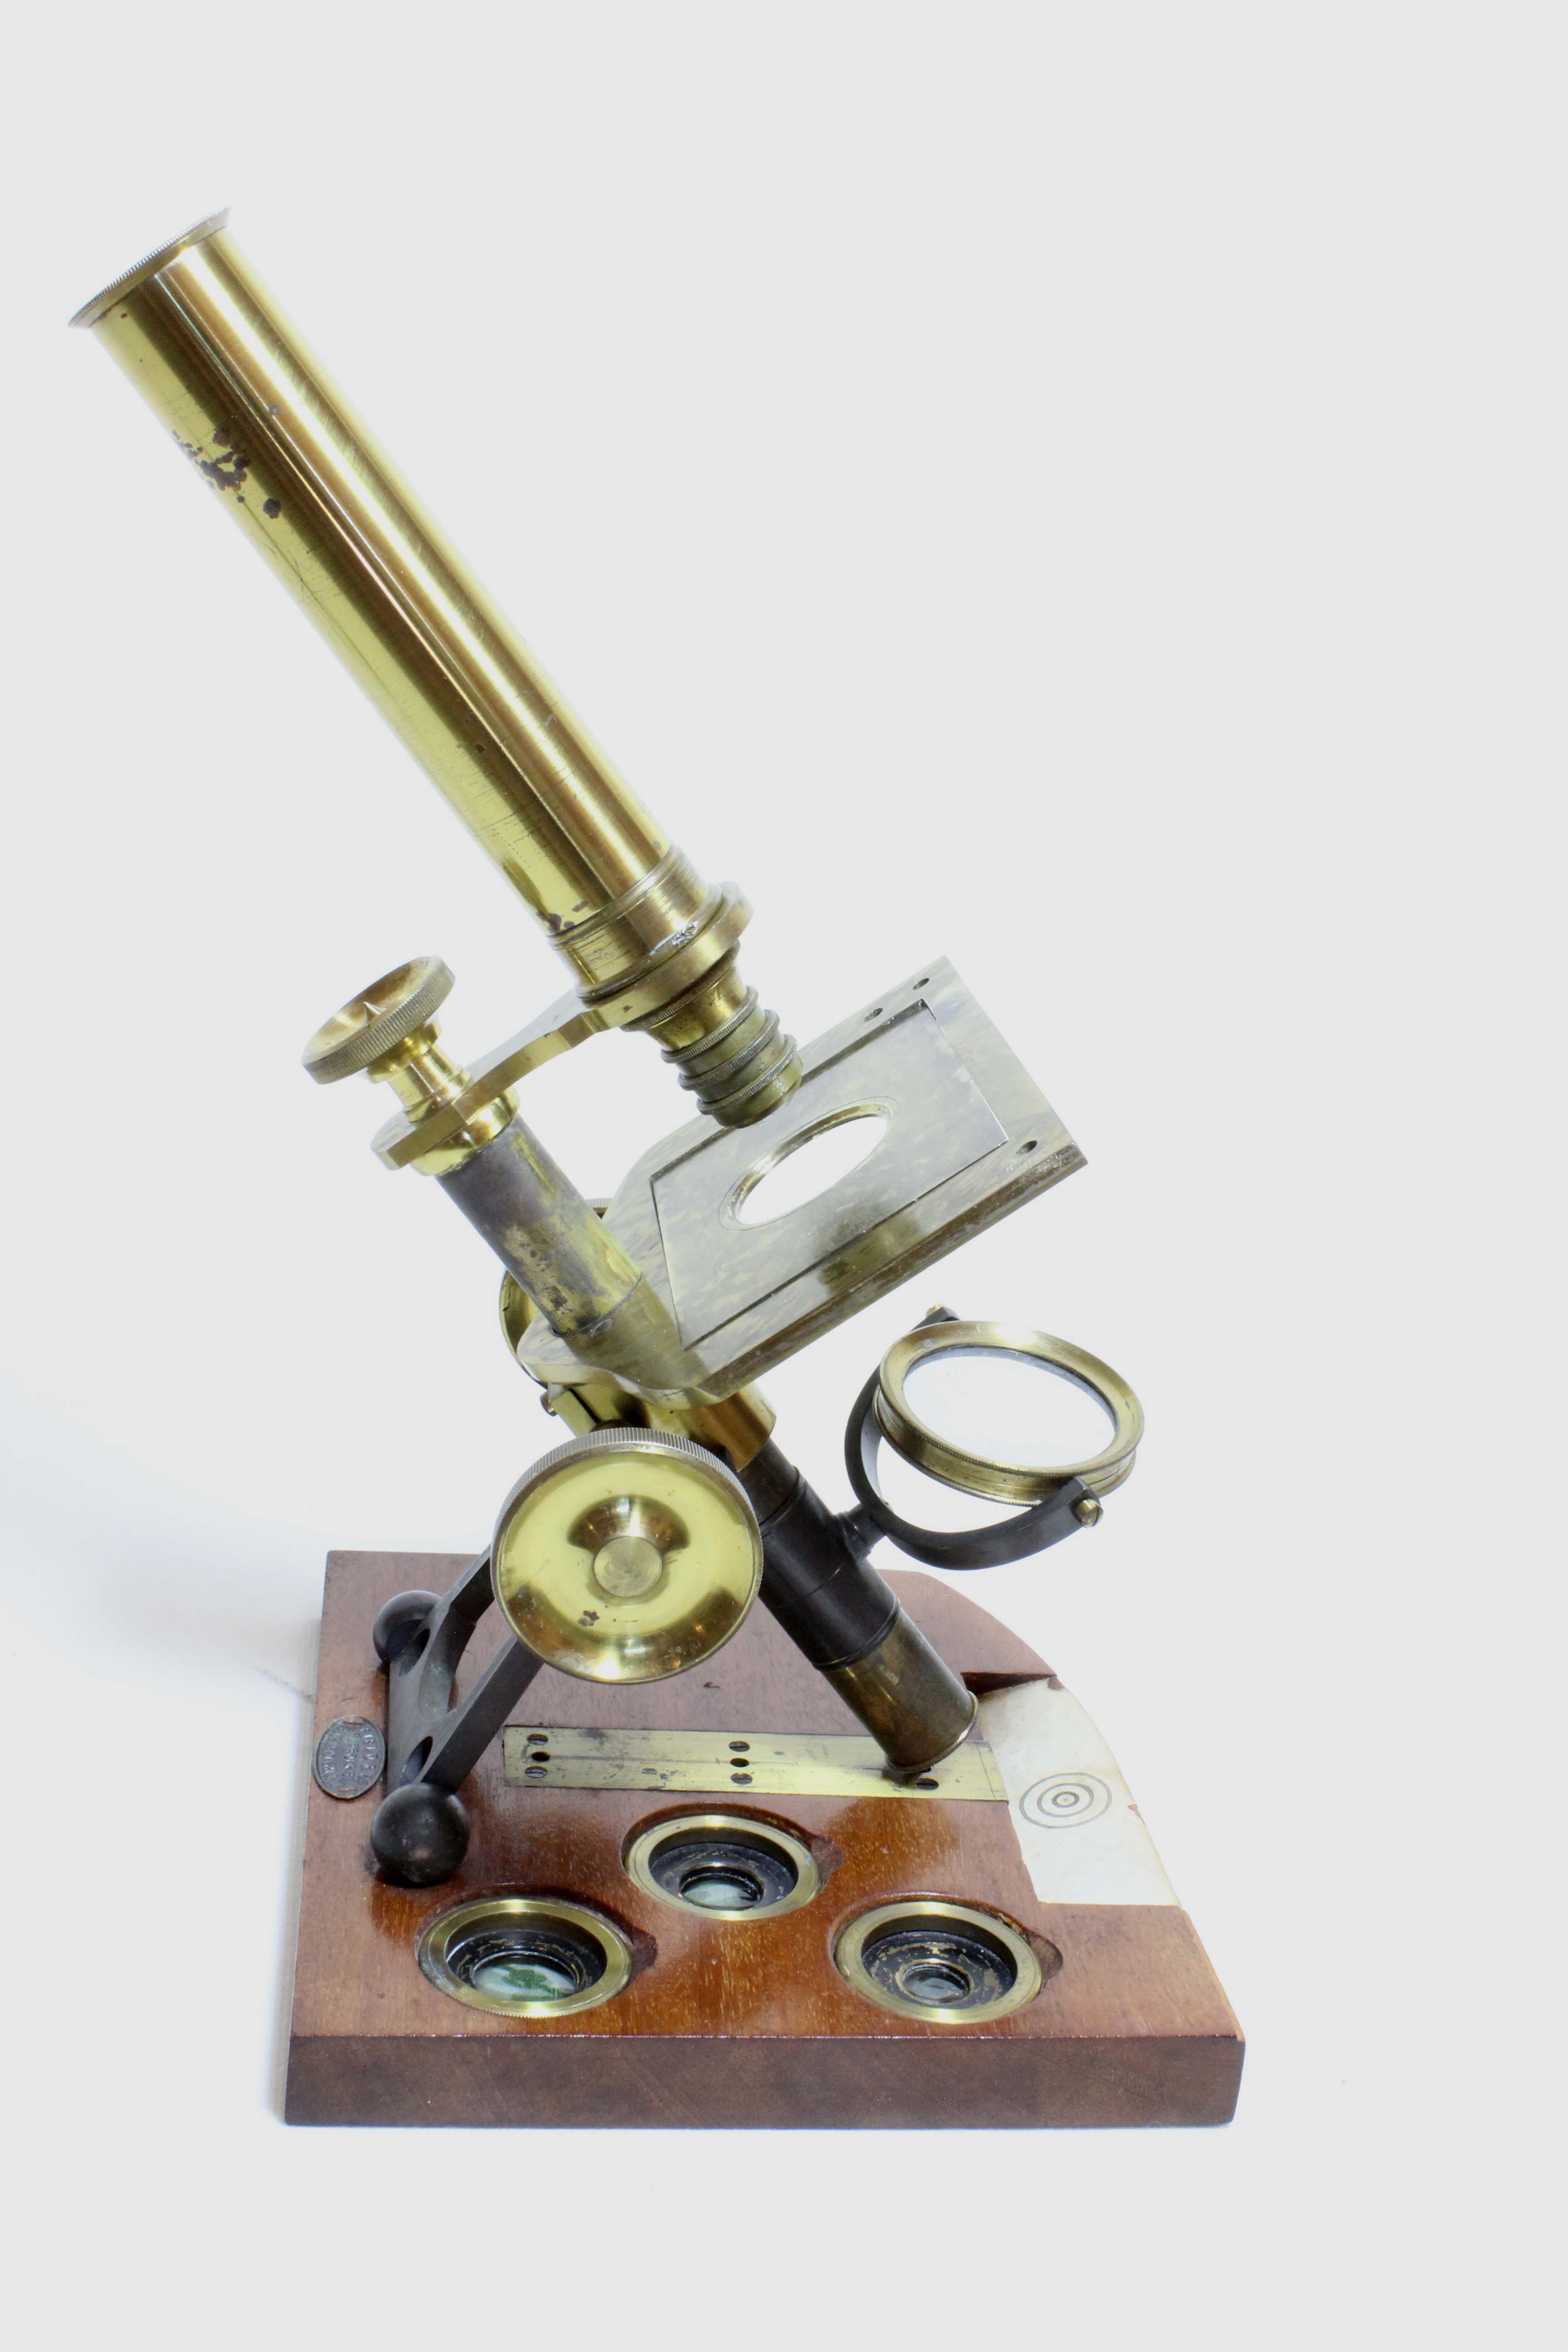 Marshall microscope